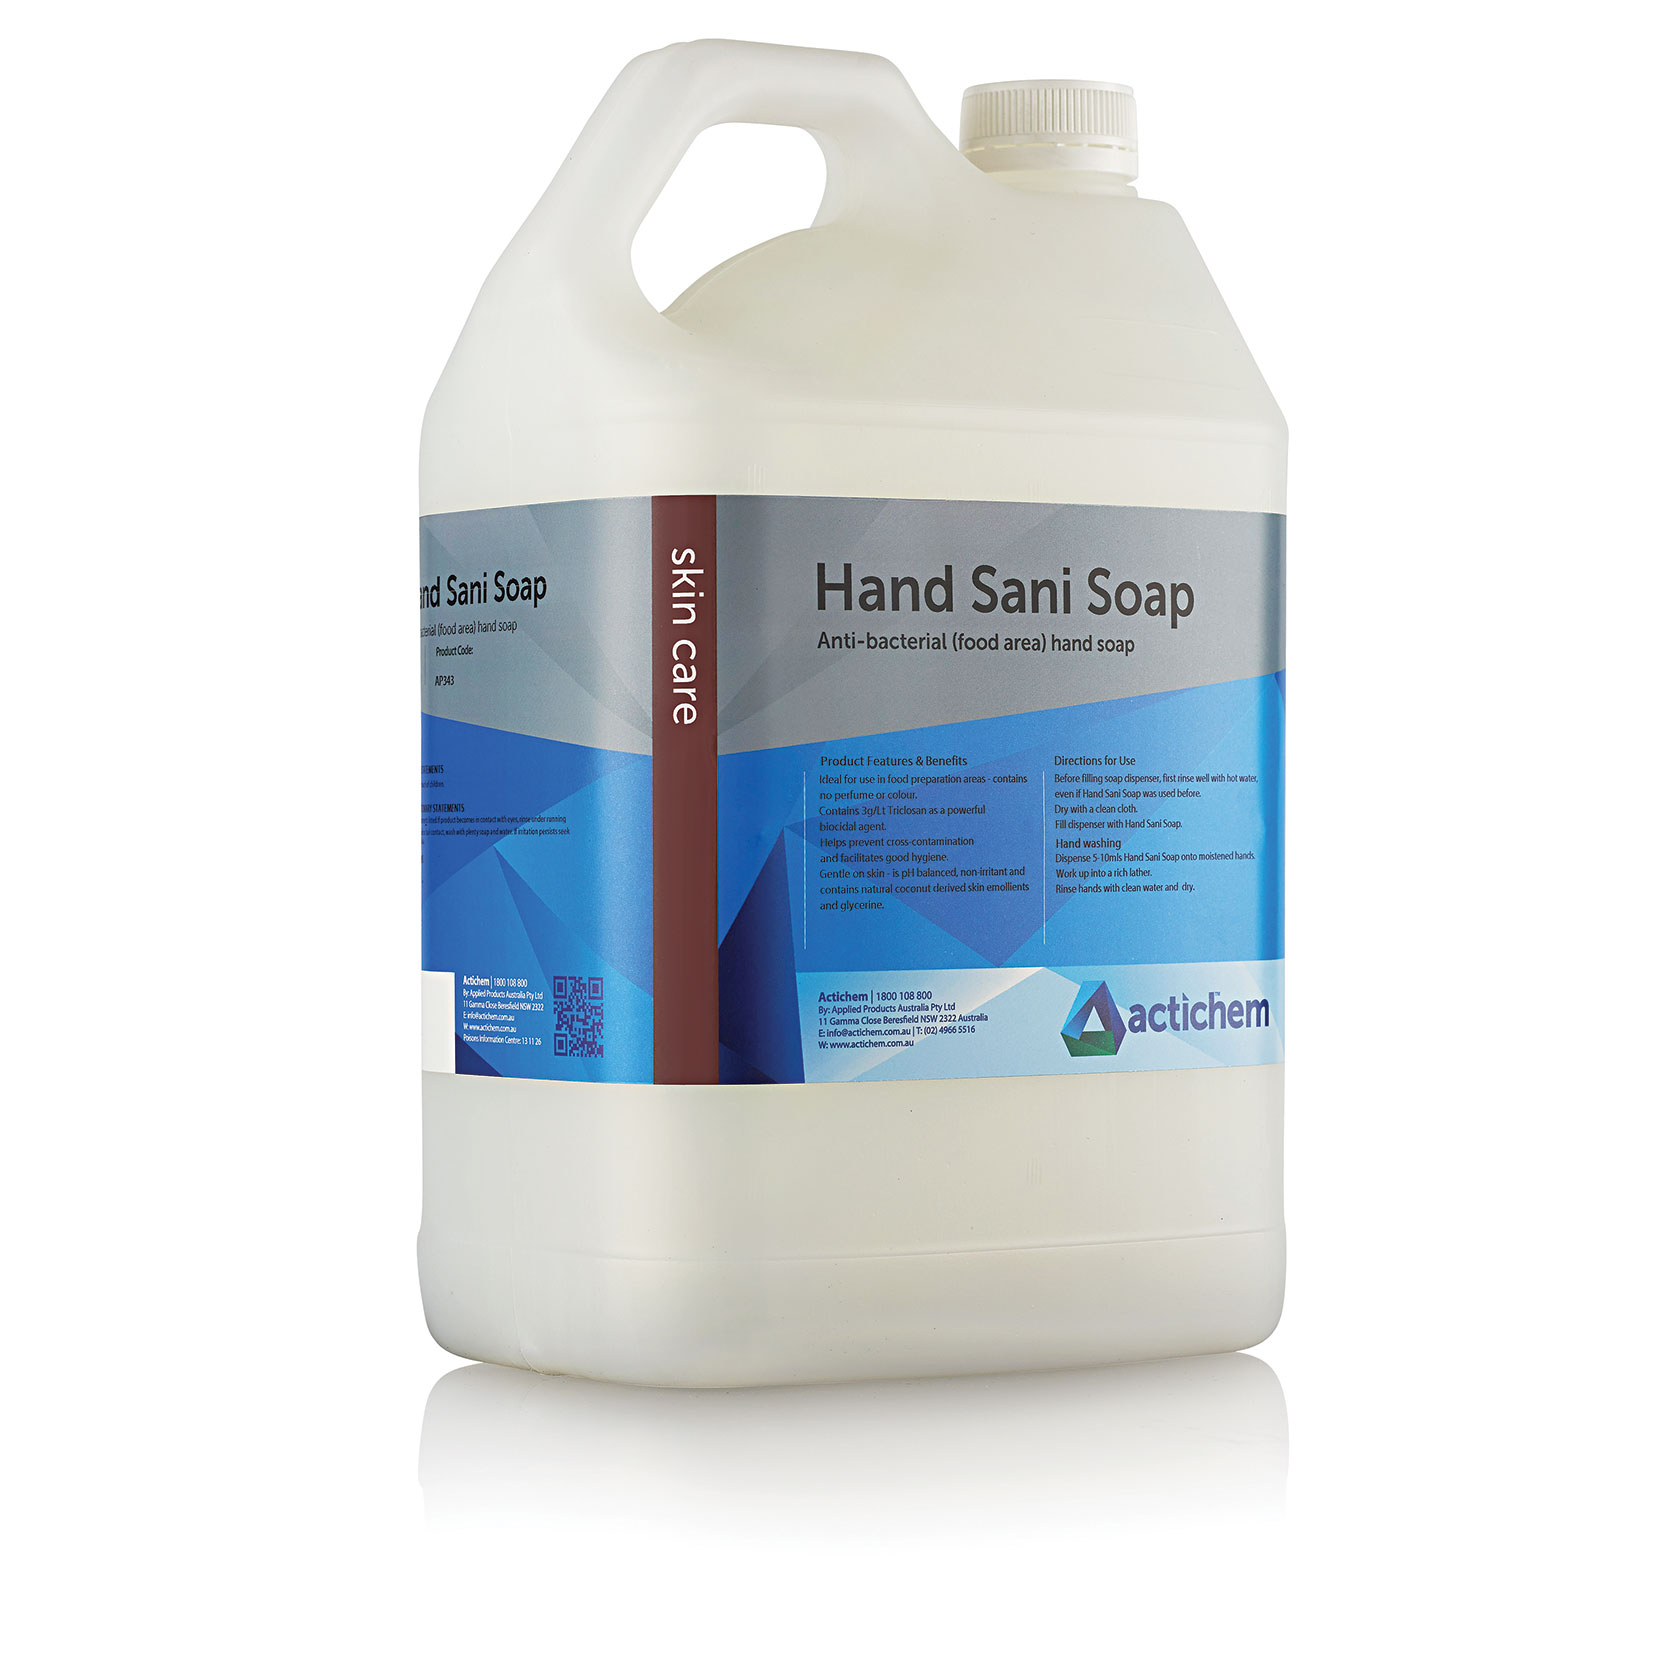 Actichem Hand Sani Soap Food safe antibacterial hand soap